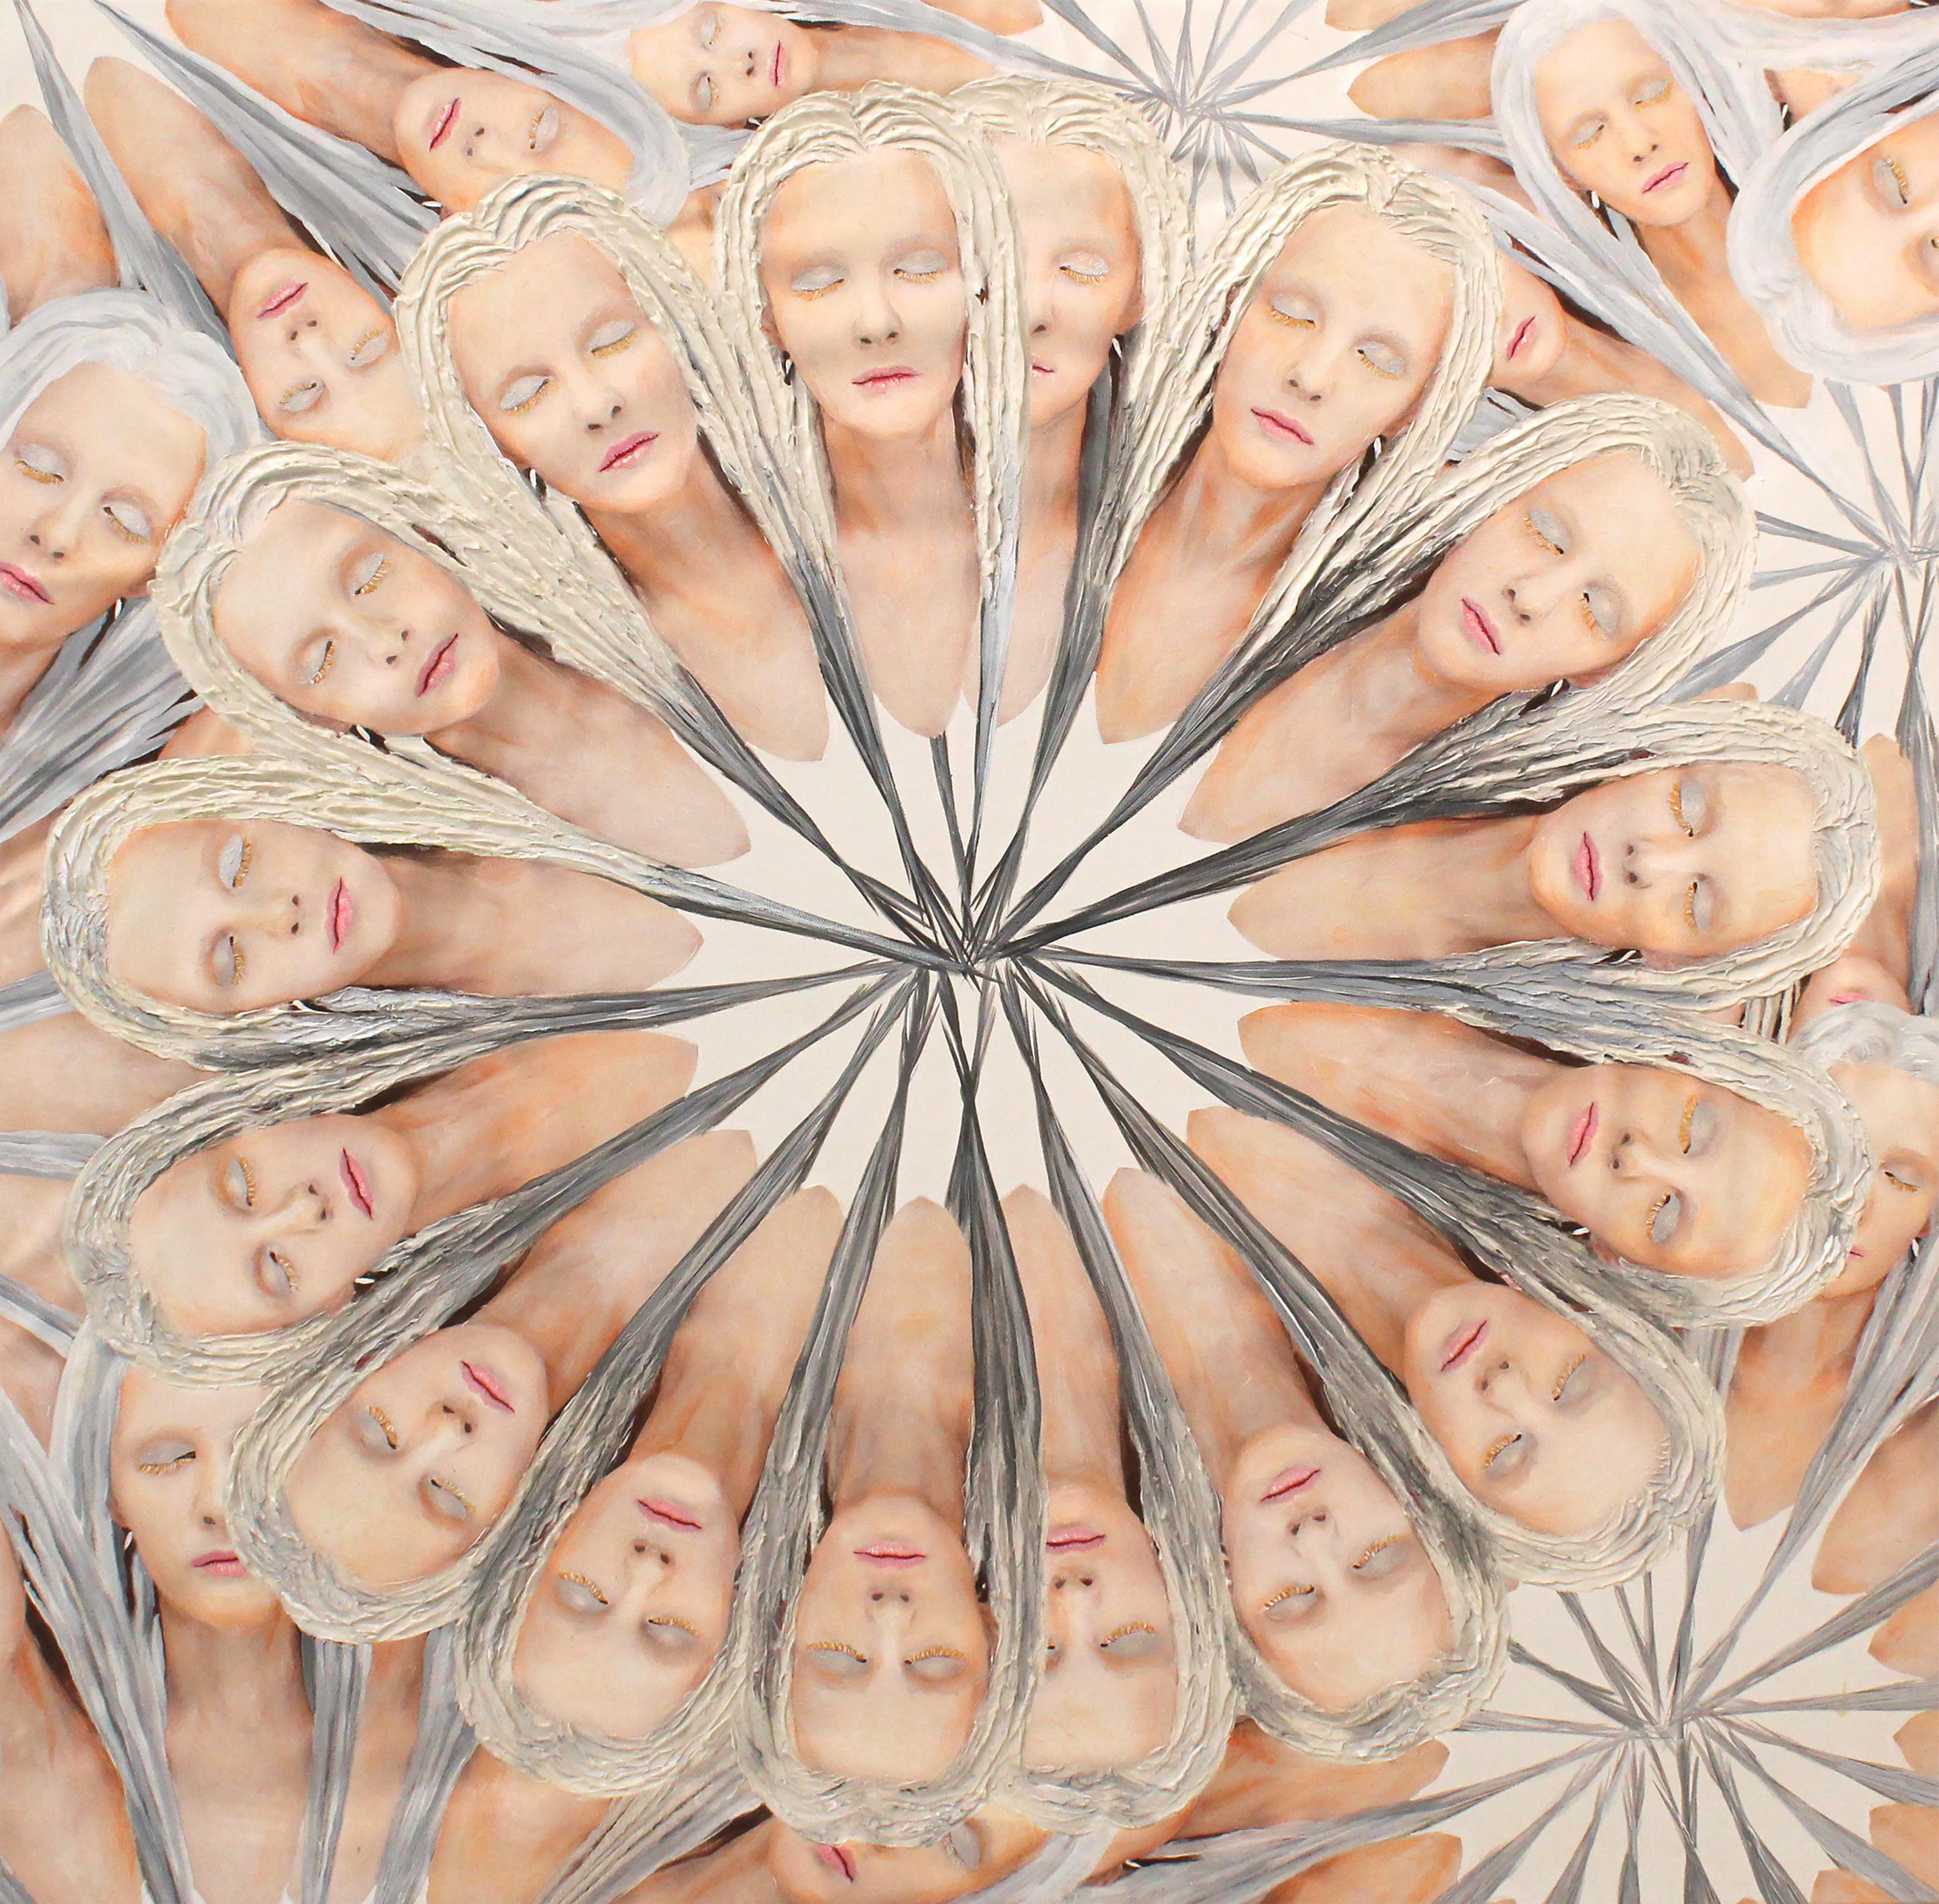 Kaleidoscope Woman, Mixed Media on Canvas - Mixed Media Art by Ophear 